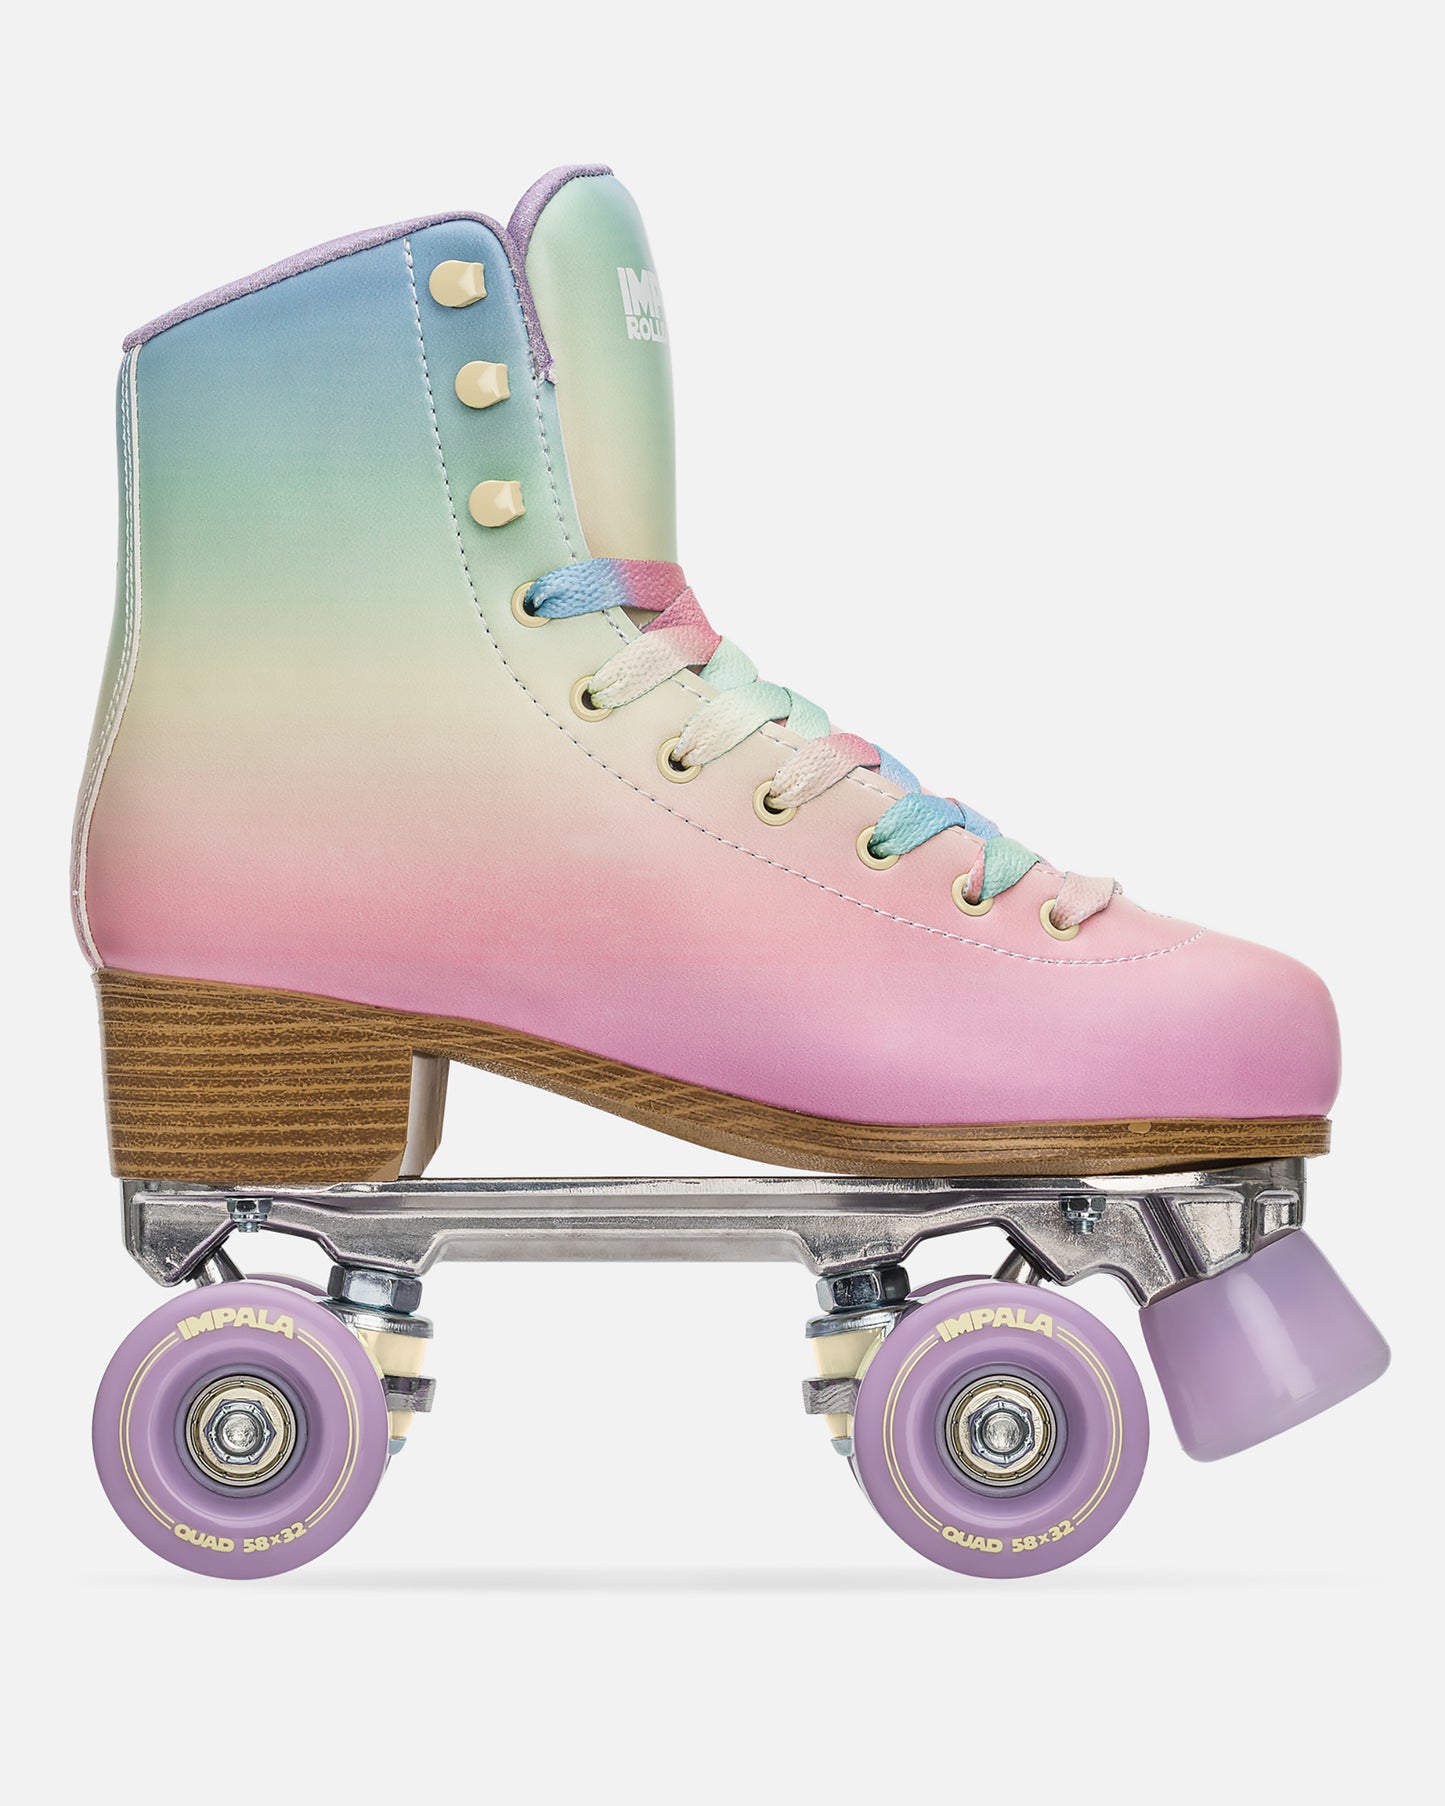 Impala Quad Skate - Pastel Fade - Impala Rollerskates